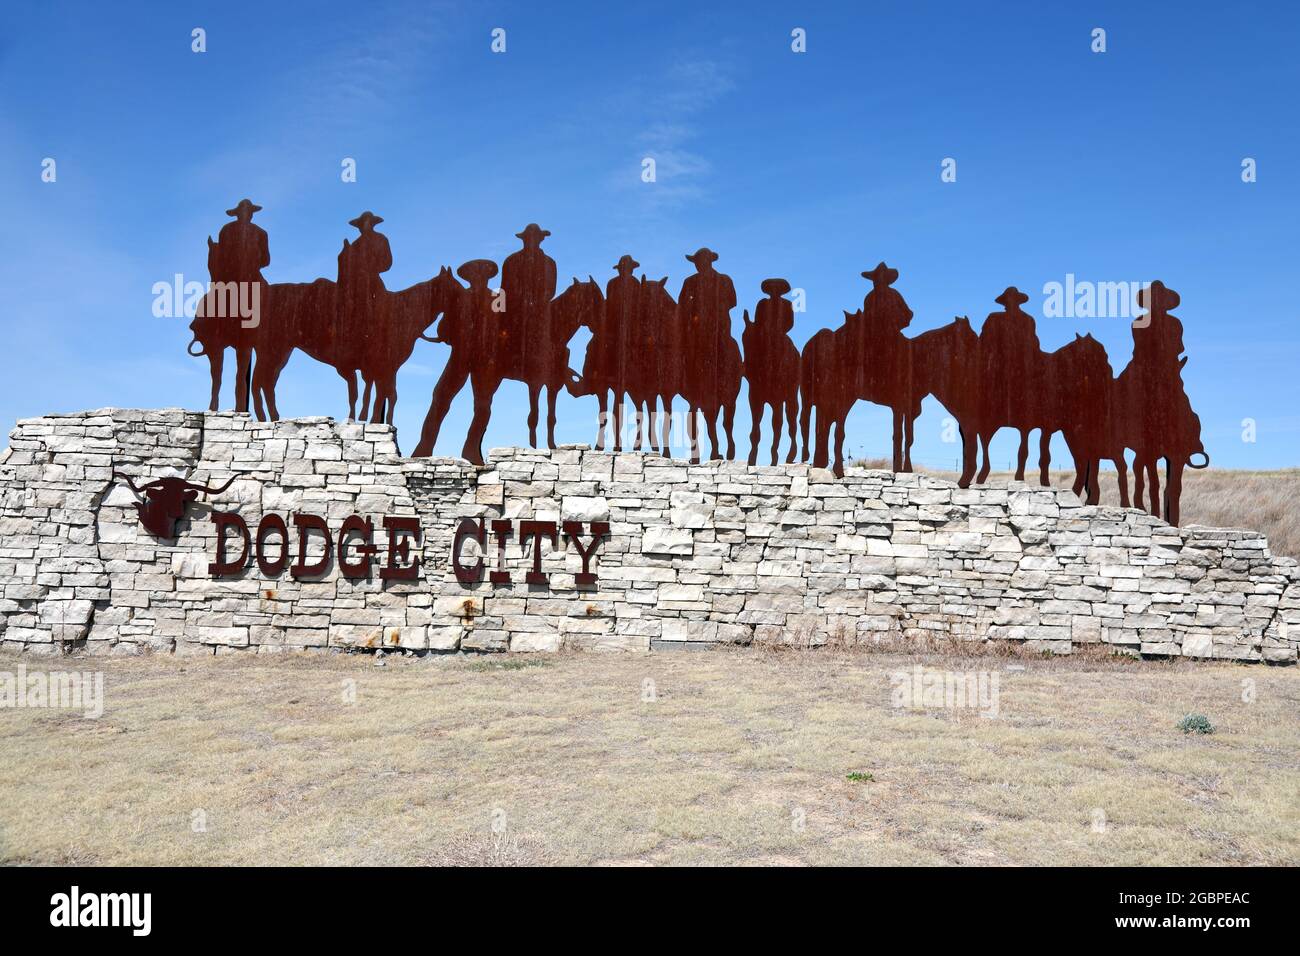 Geographie/Reisen, USA, Kansas, Dodge City, Cowboys am Ortsnamen-Schild, Dodge City, Kansas, ZUSÄTZLICHE-RIGHTS-CLEARANCE-INFO-NOT-AVAILABLE Stockfoto